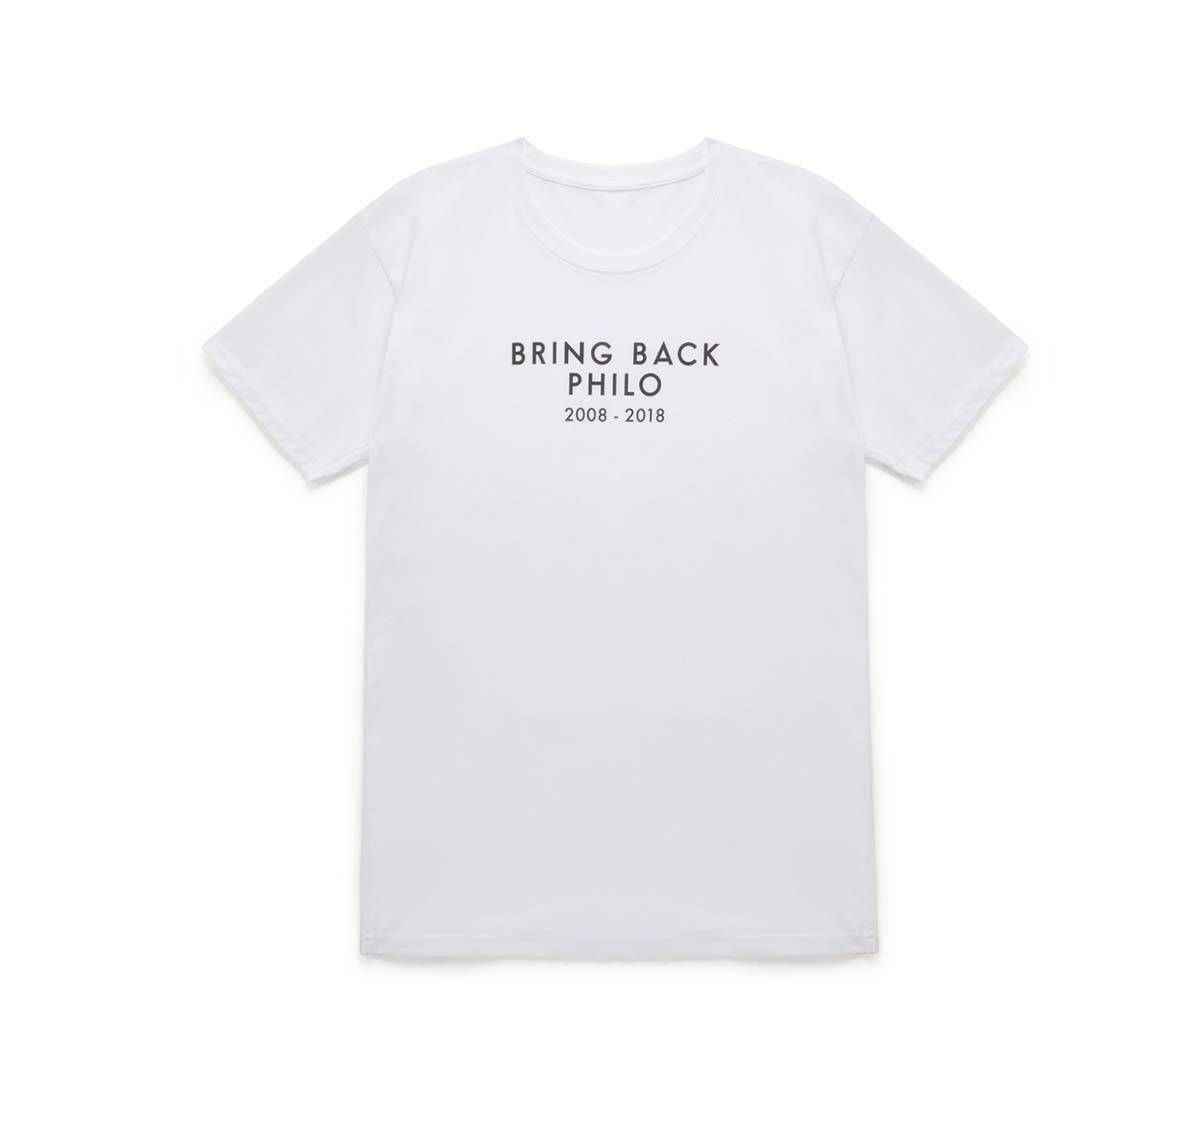 T-shirt Bring Back Philo